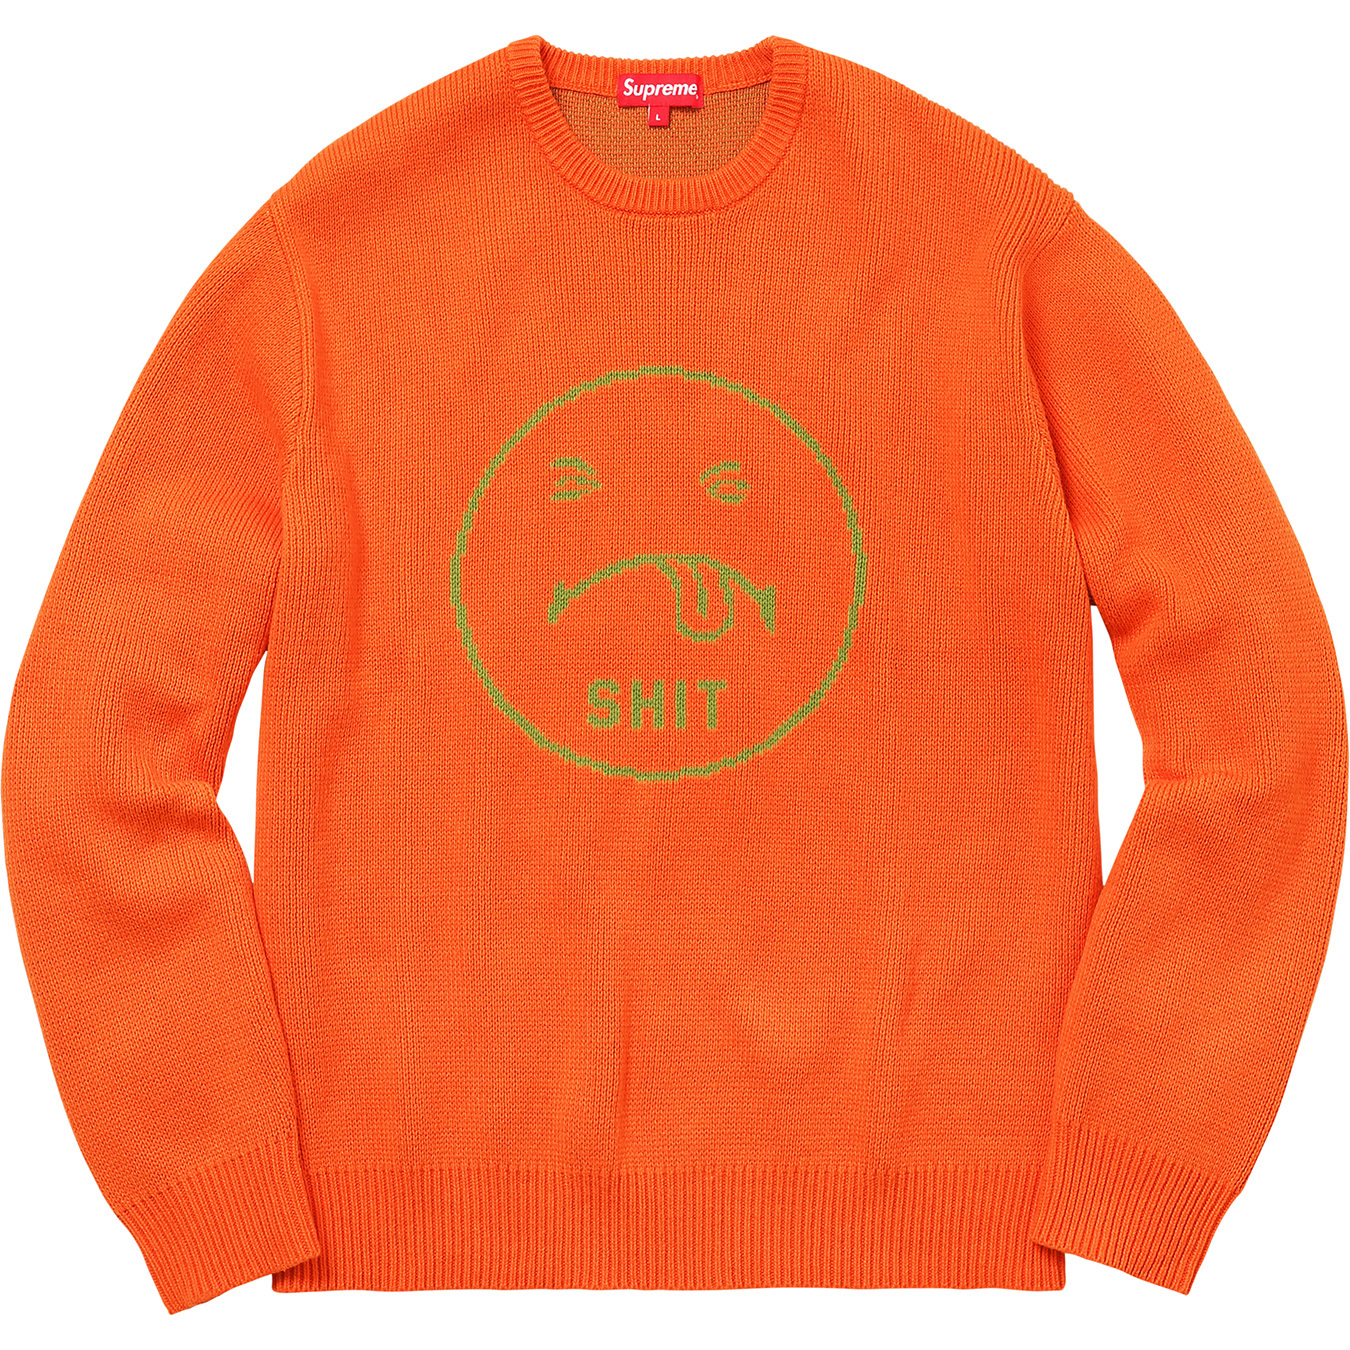 Supreme Shit Sweater Orange